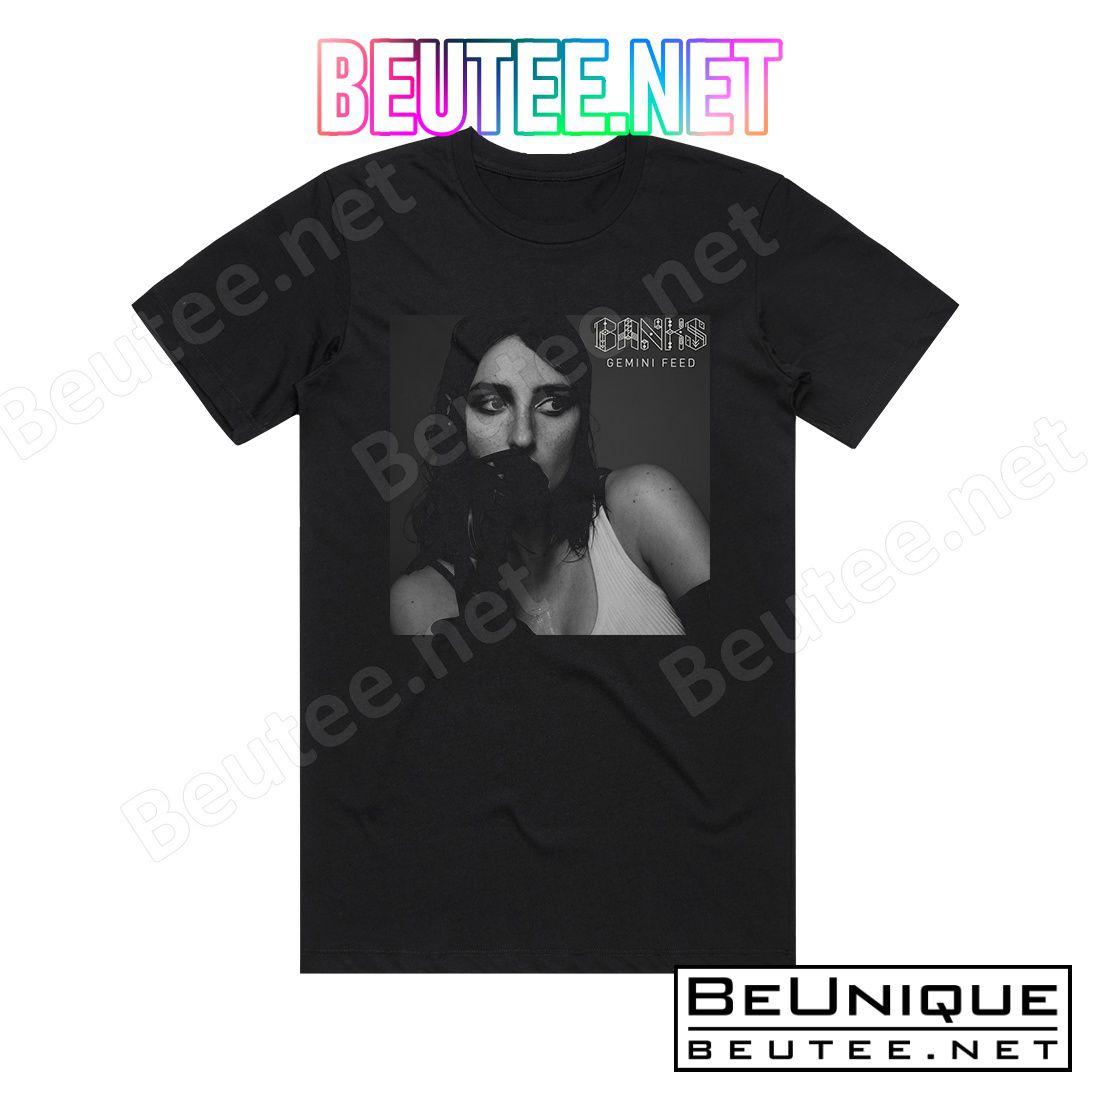 BANKS Gemini Feed Album Cover T-Shirt